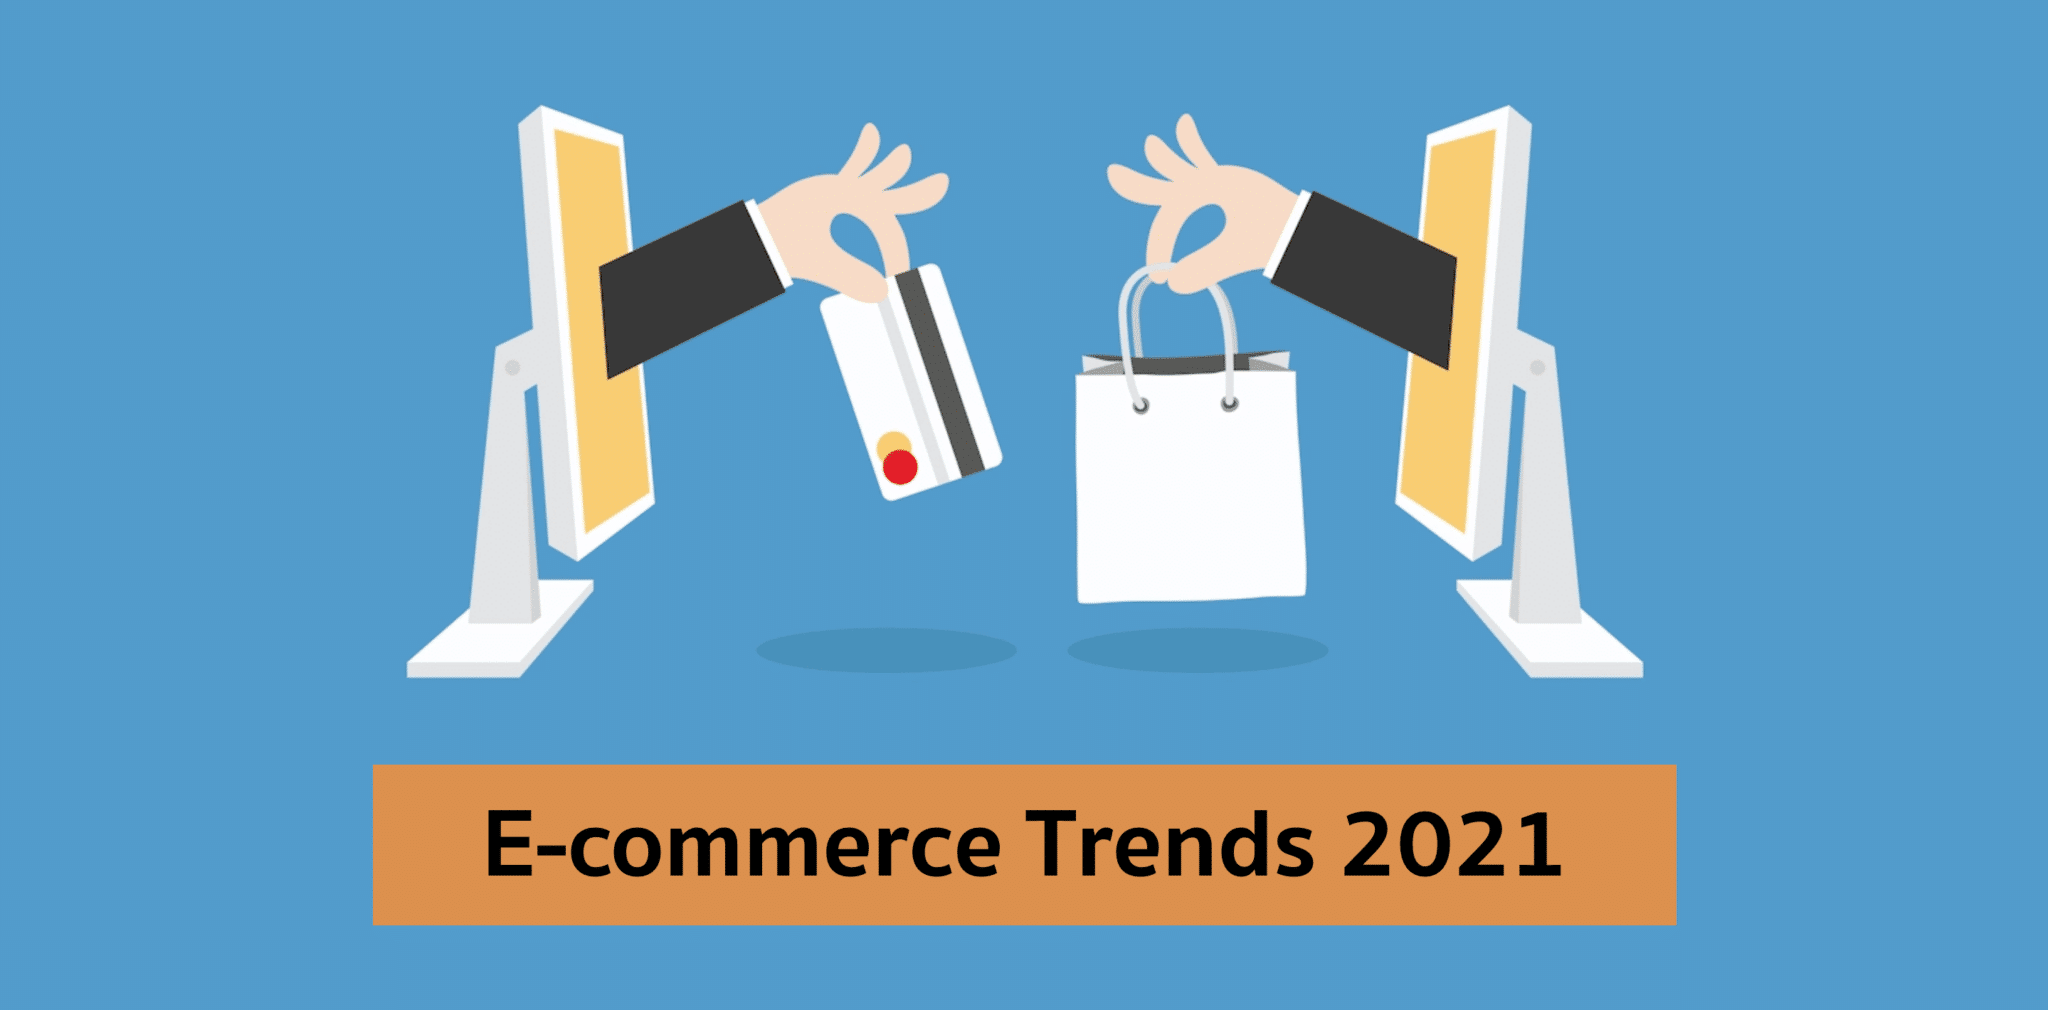 E-commerce Trends & Insight 2021 ที่ควรนำไปปรับใช้